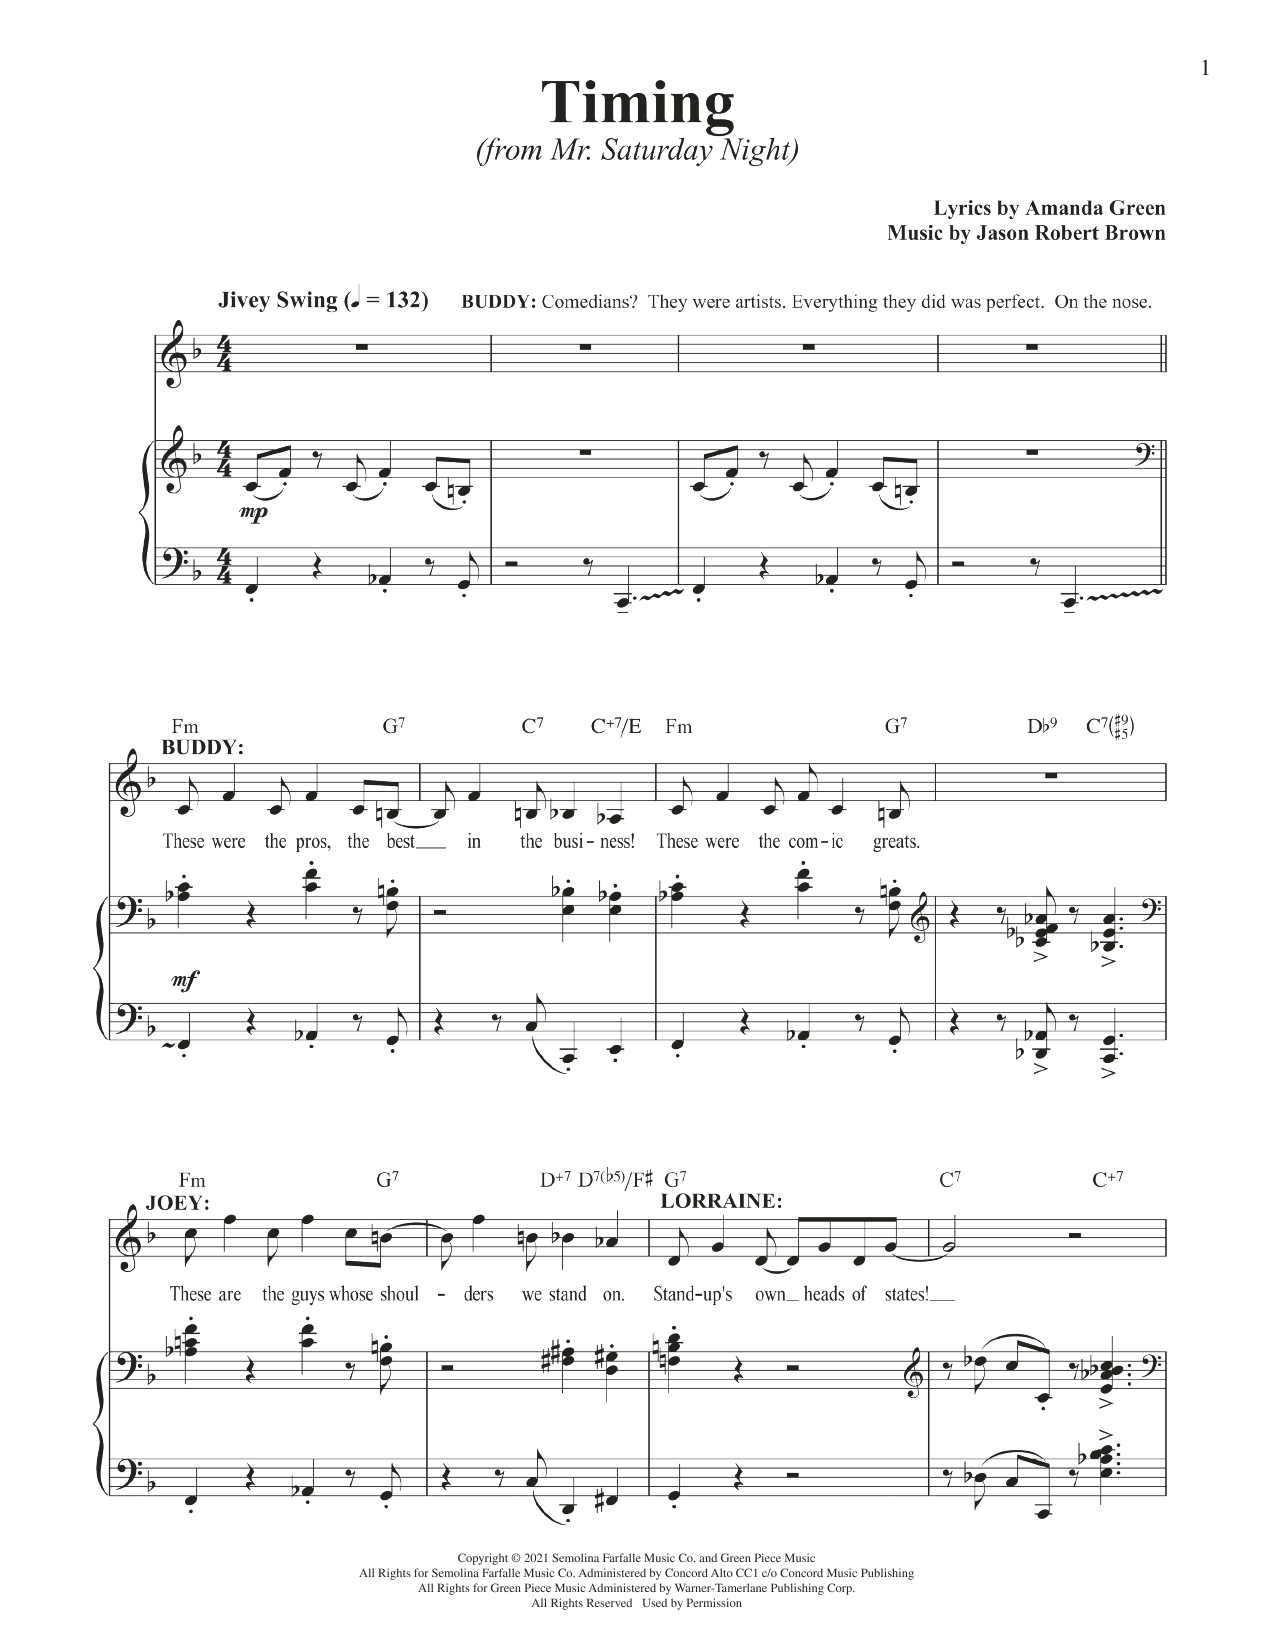 Jason Robert Brown and Amanda Green Timing (from Mr. Saturday Night) Sheet Music Notes & Chords for Piano & Vocal - Download or Print PDF